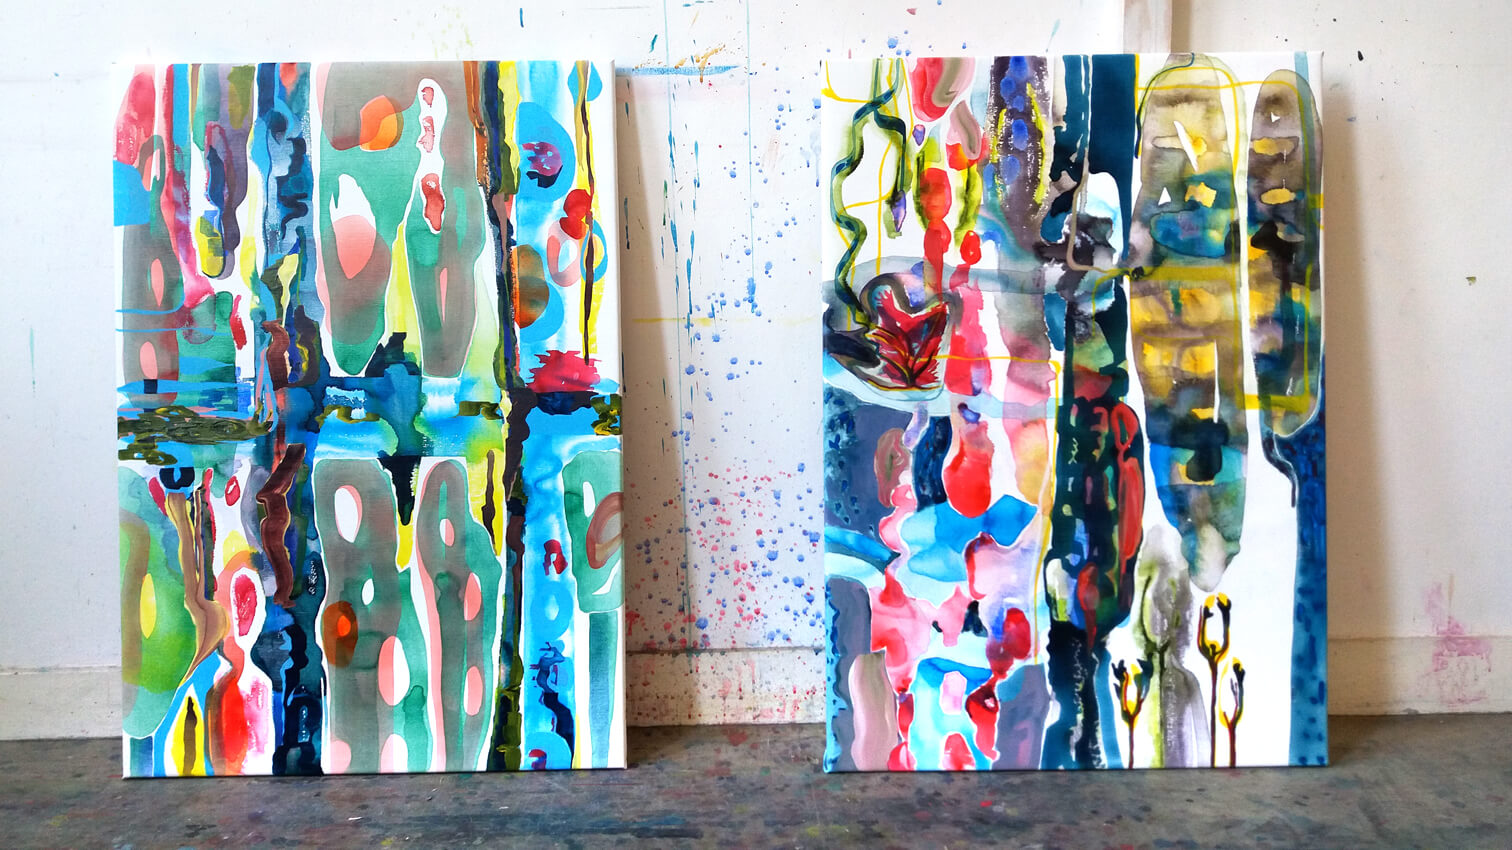 Resonance painting schilderij geazwart doek canvas sound abstract diptych